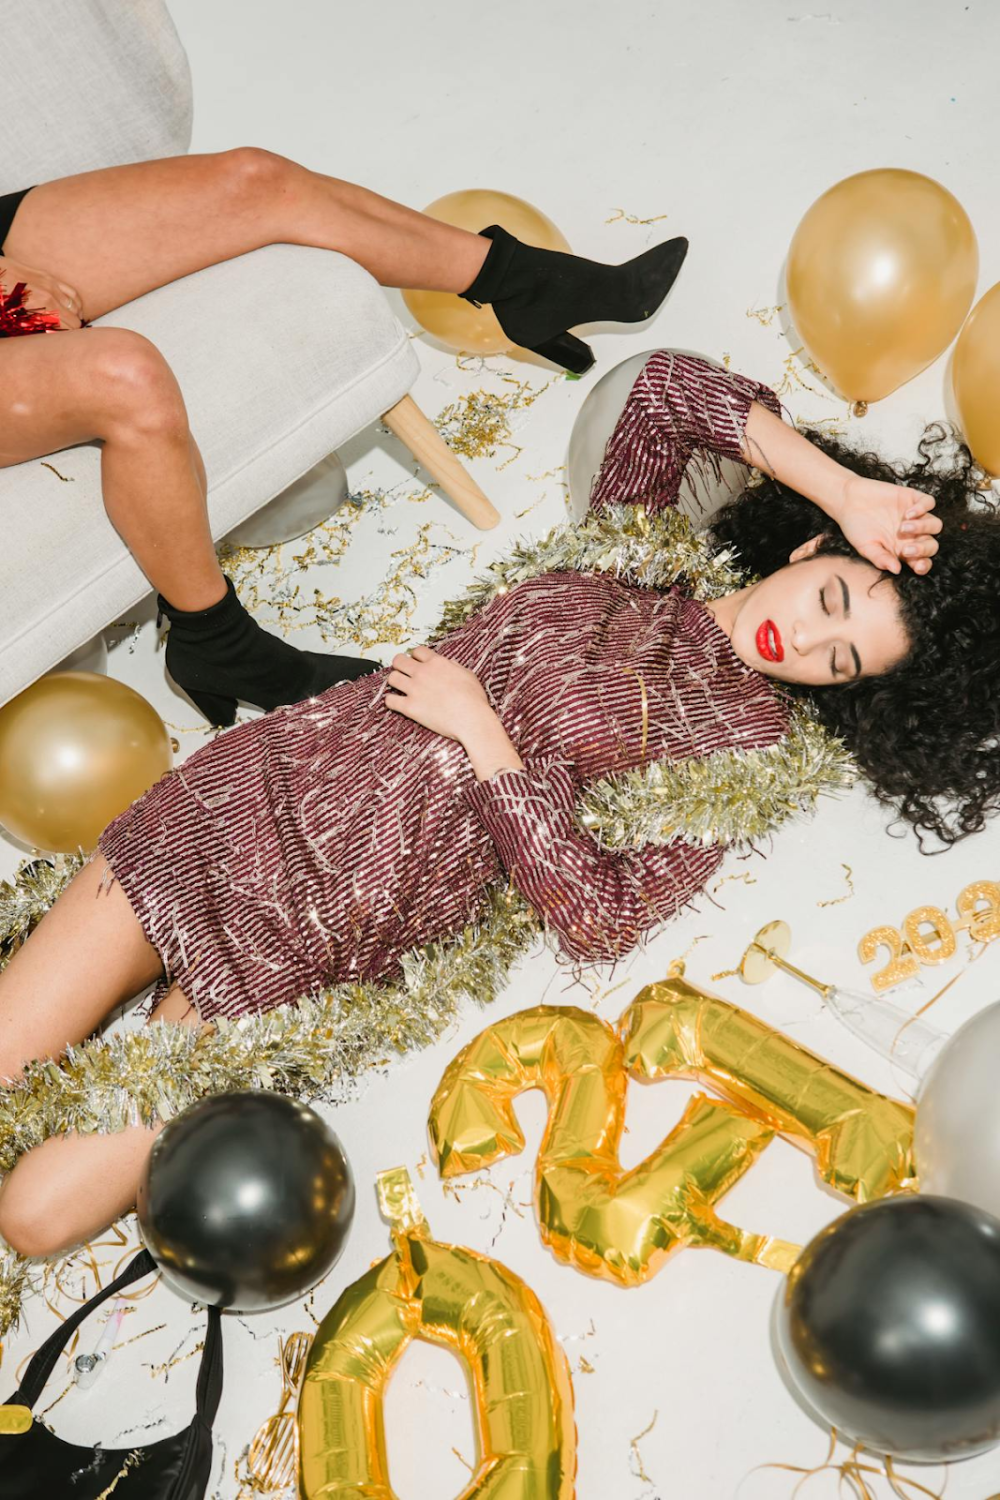 a woman lying down wearing a party dress